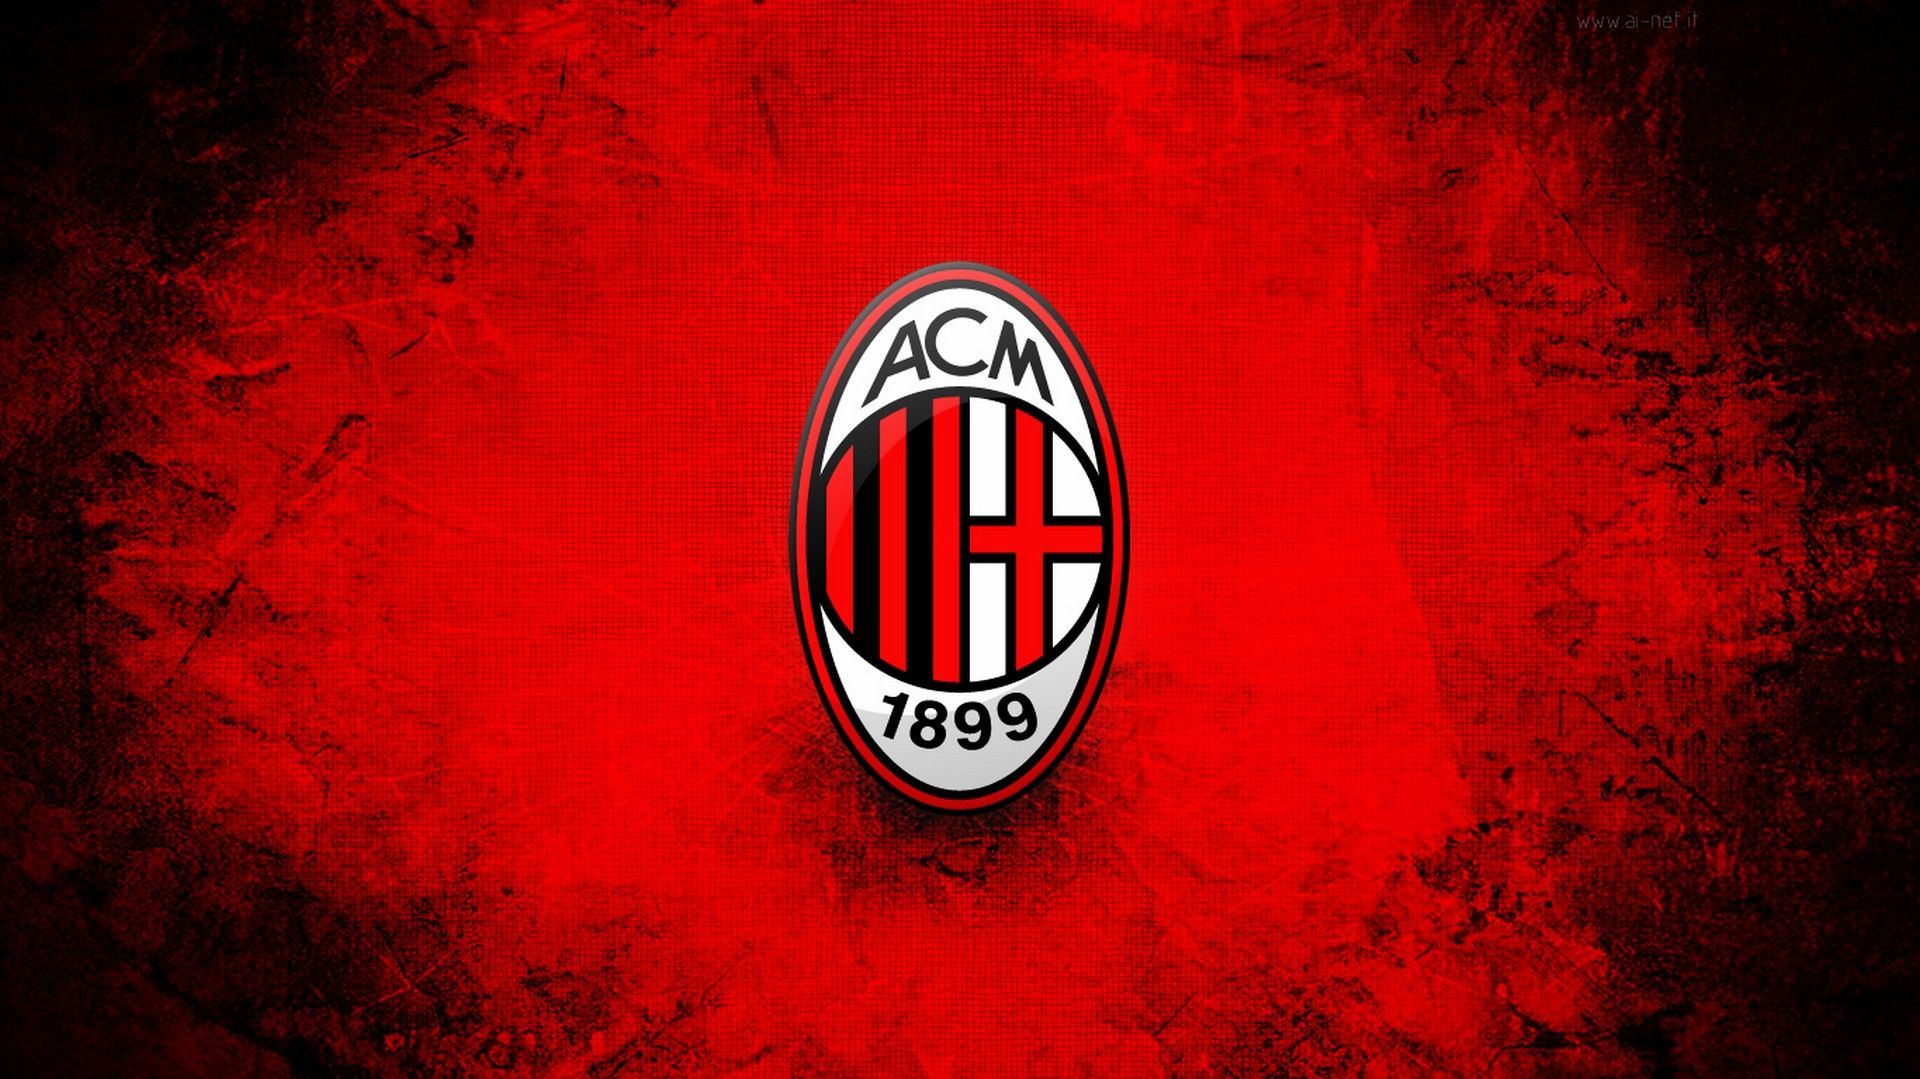 AC Milan Wallpaper HD | Fondo de pantalla | Ac milan, Milan fondos de pantalla, Milan